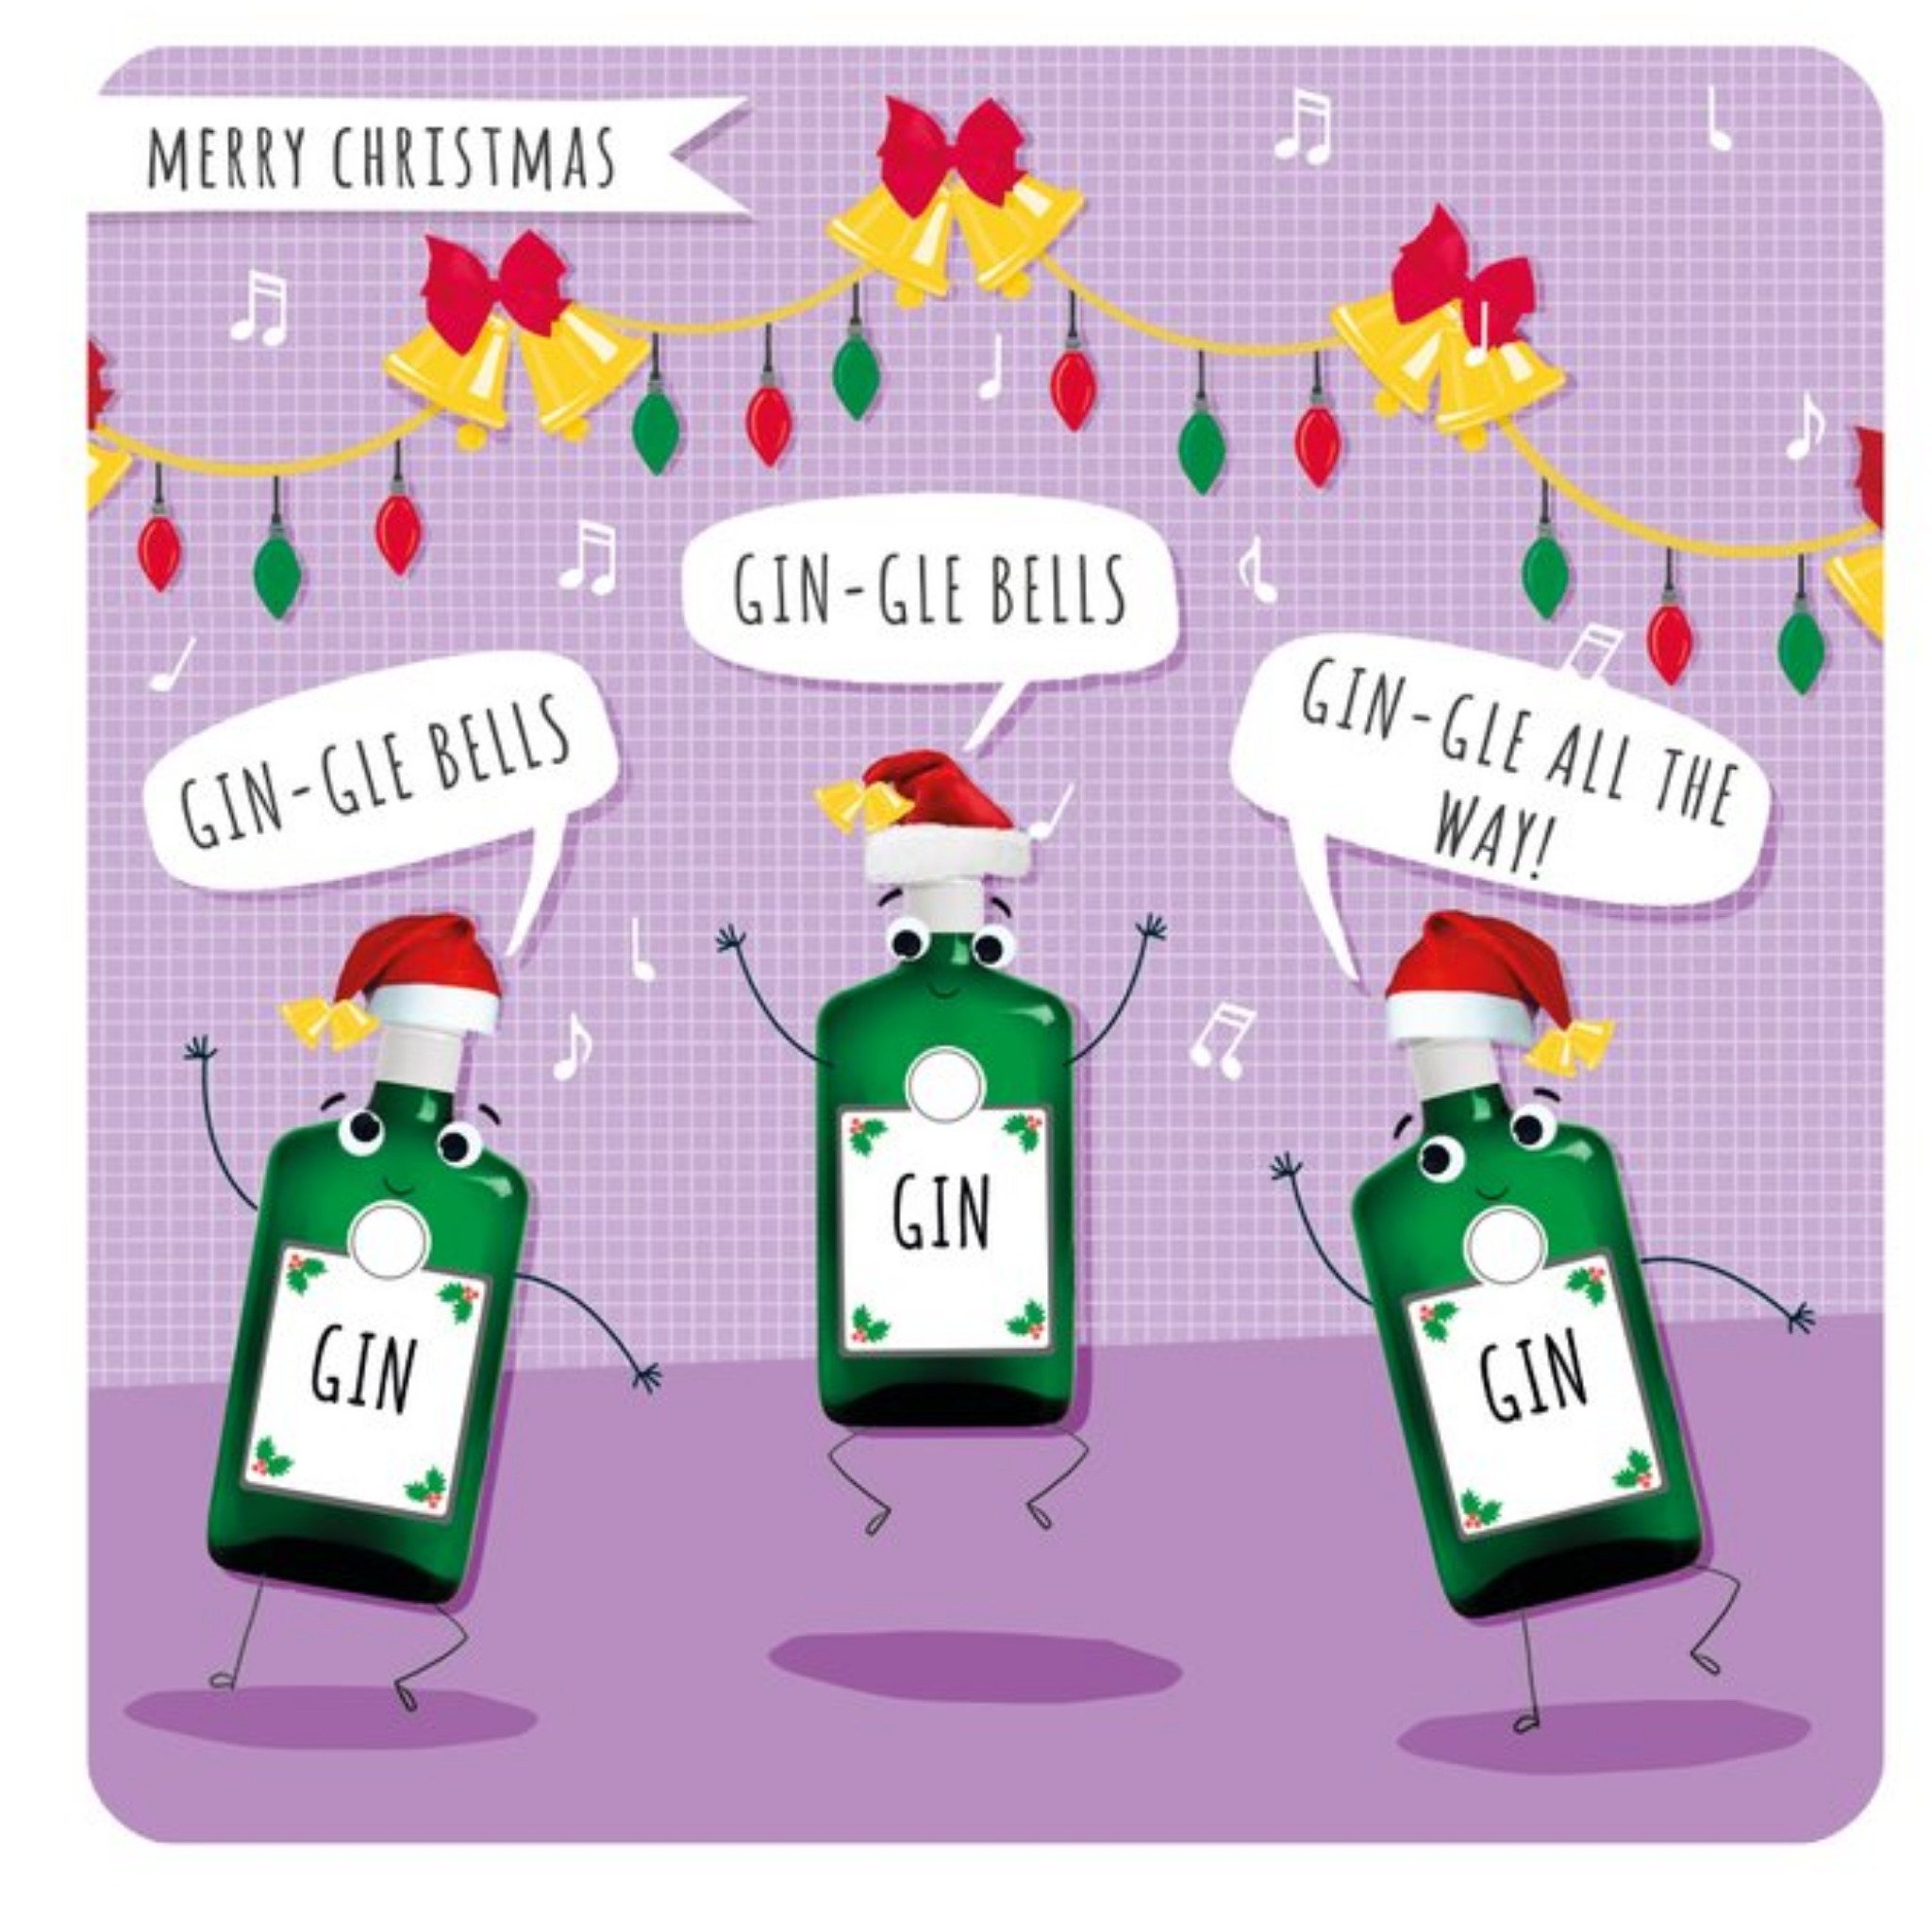 Moonpig Funny Gin Christmas Card - Gin-Gle Bells, Square